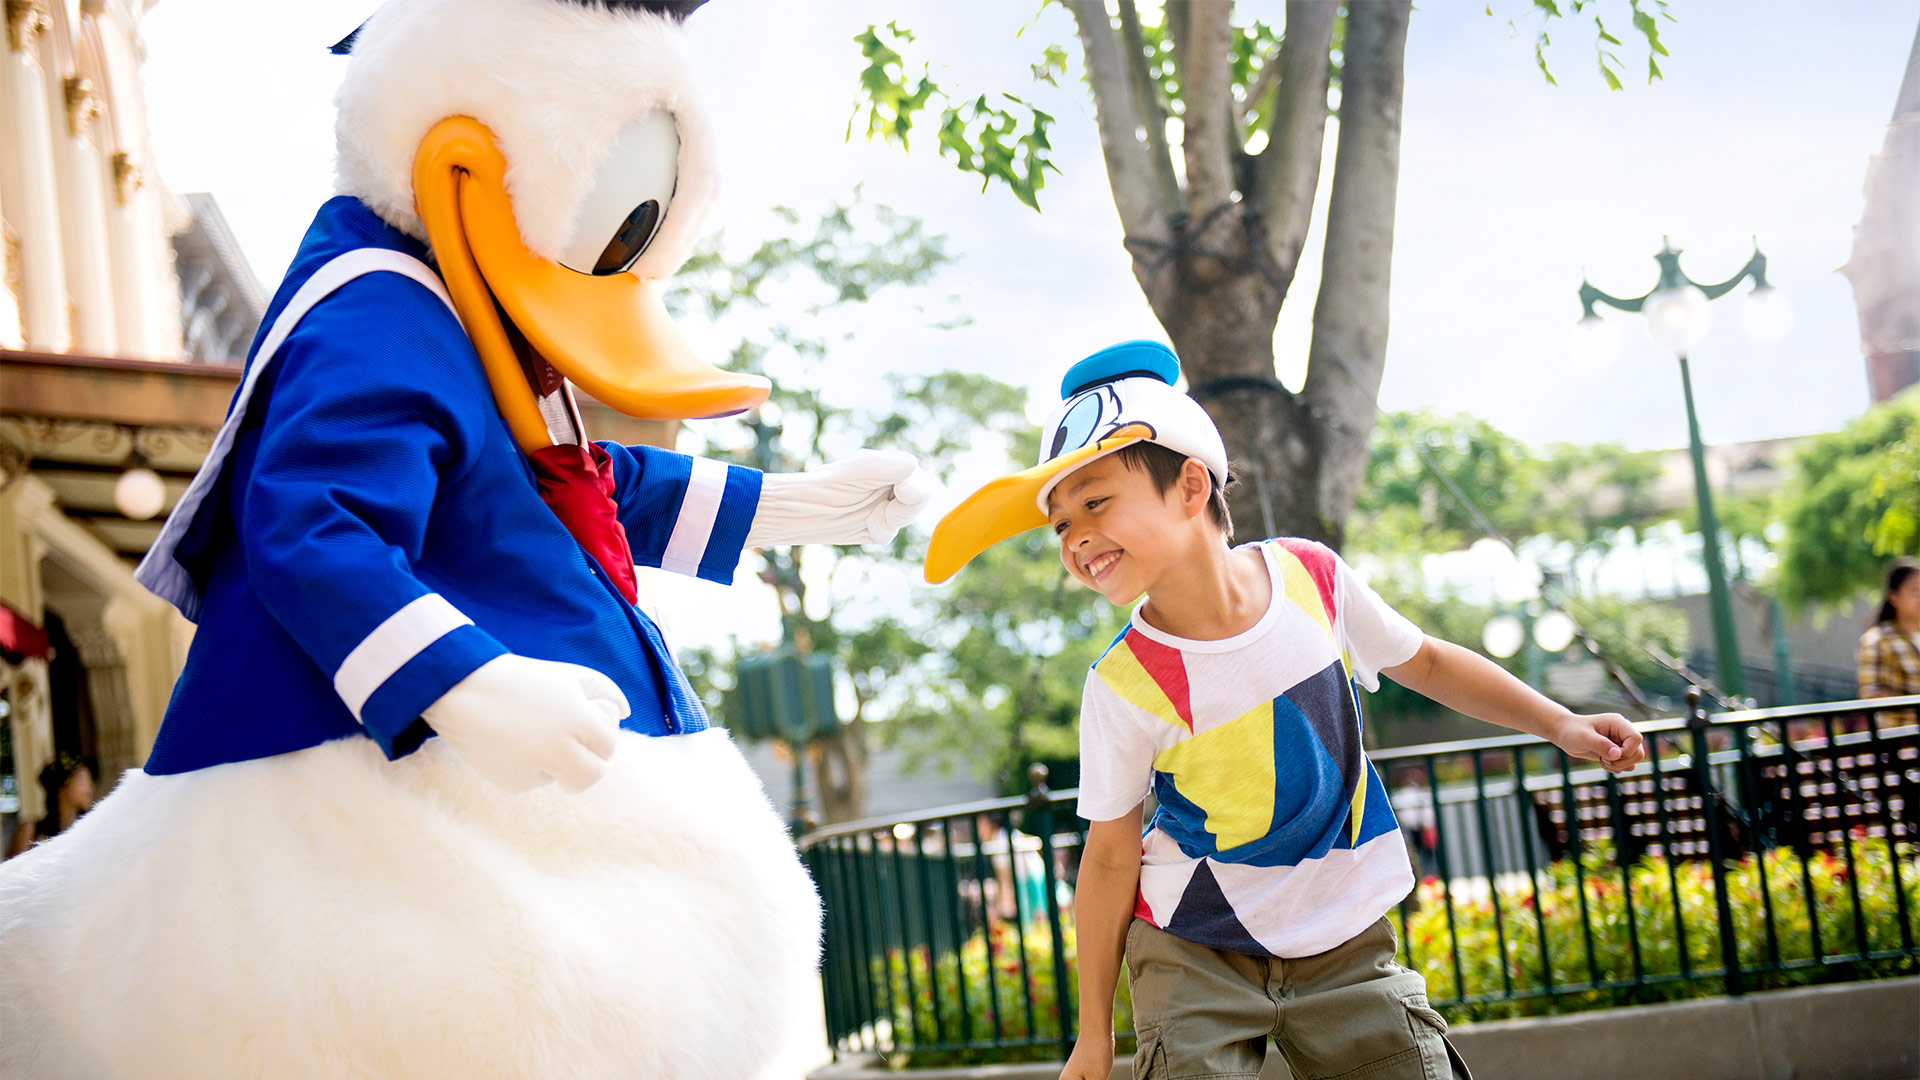 Meet your favourite Disney characters like Donald Duck at Hong Kong Disneyland